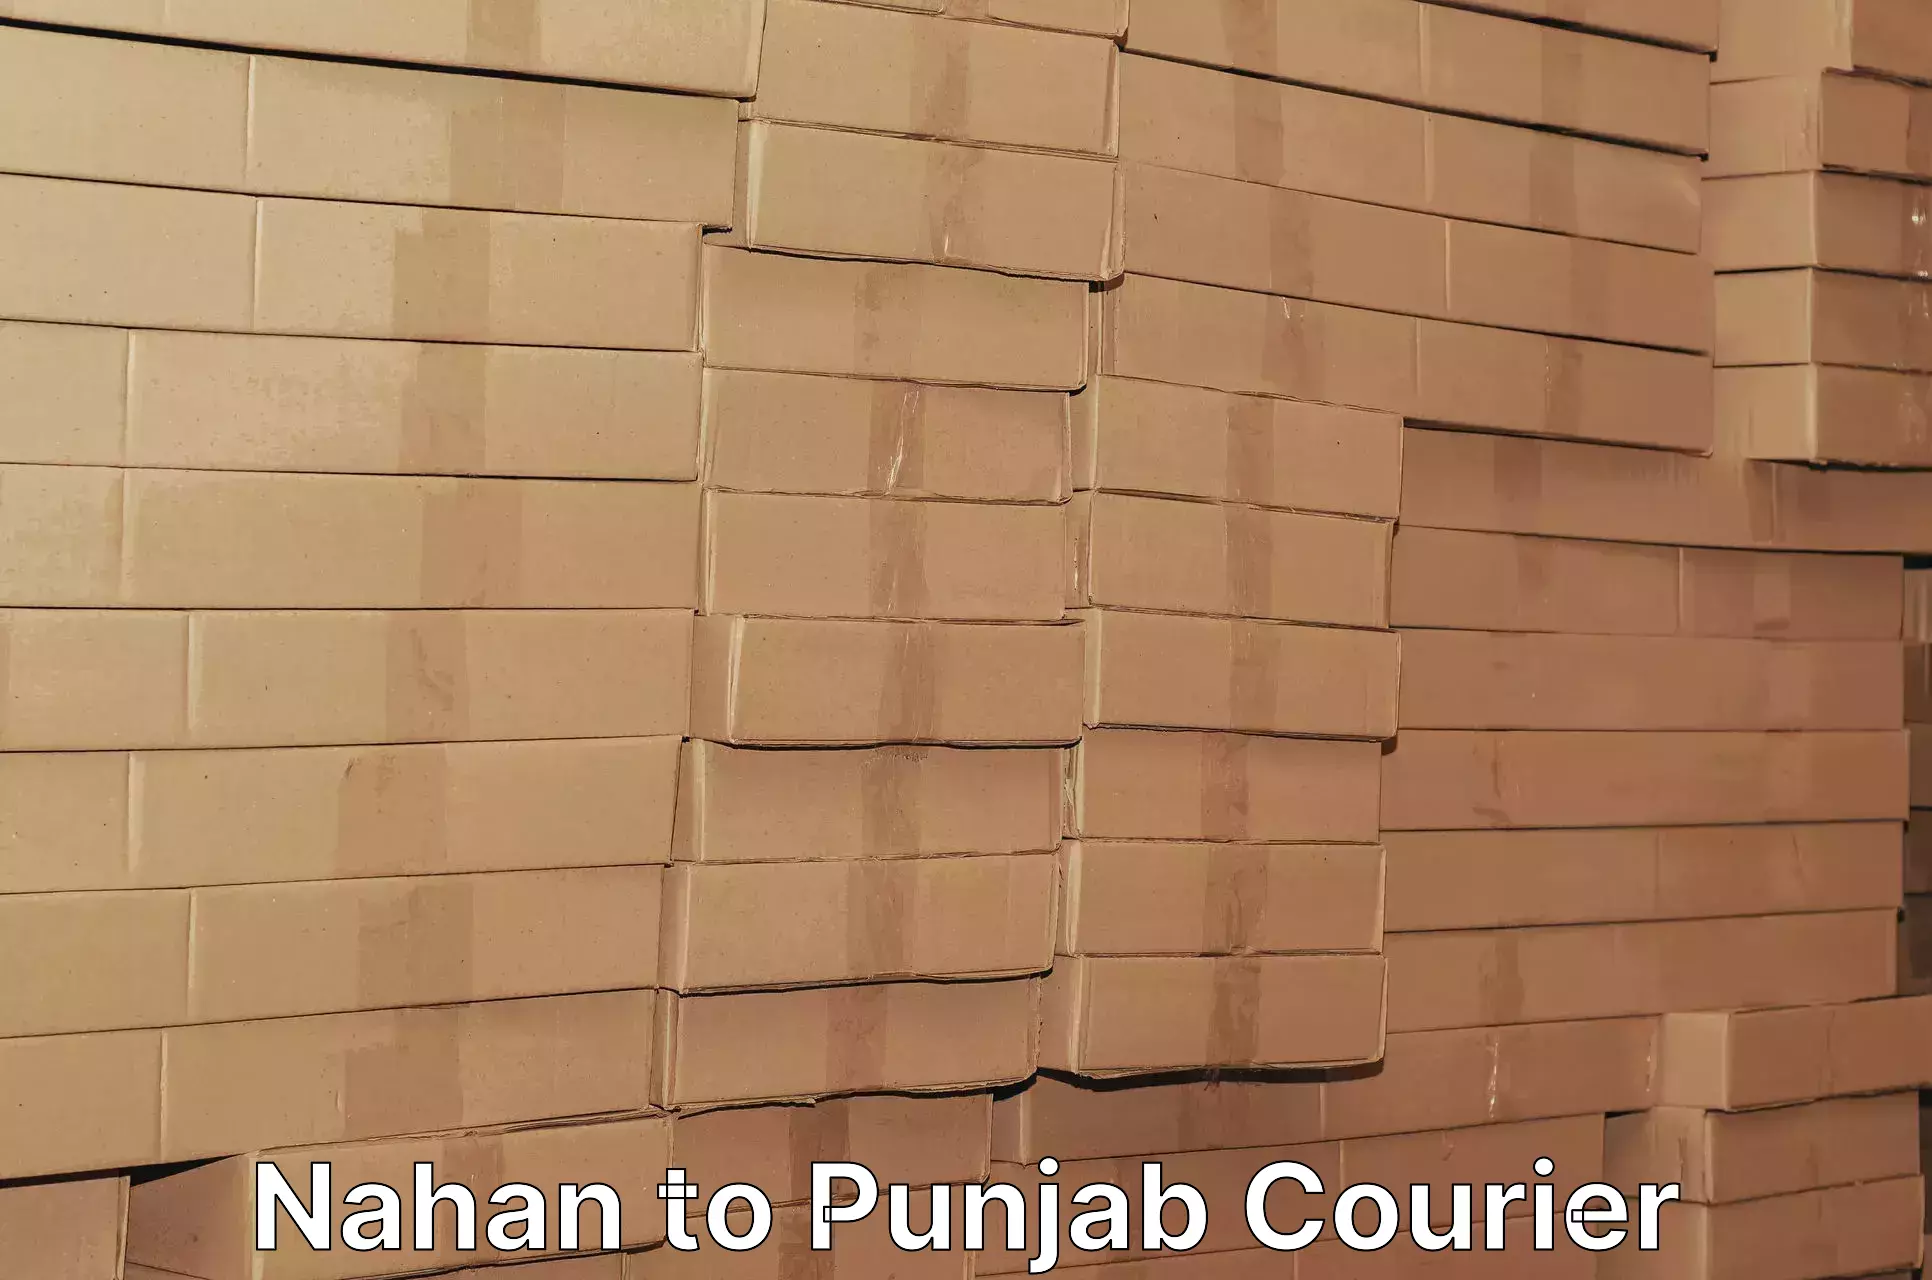 Courier service booking Nahan to Jalandhar